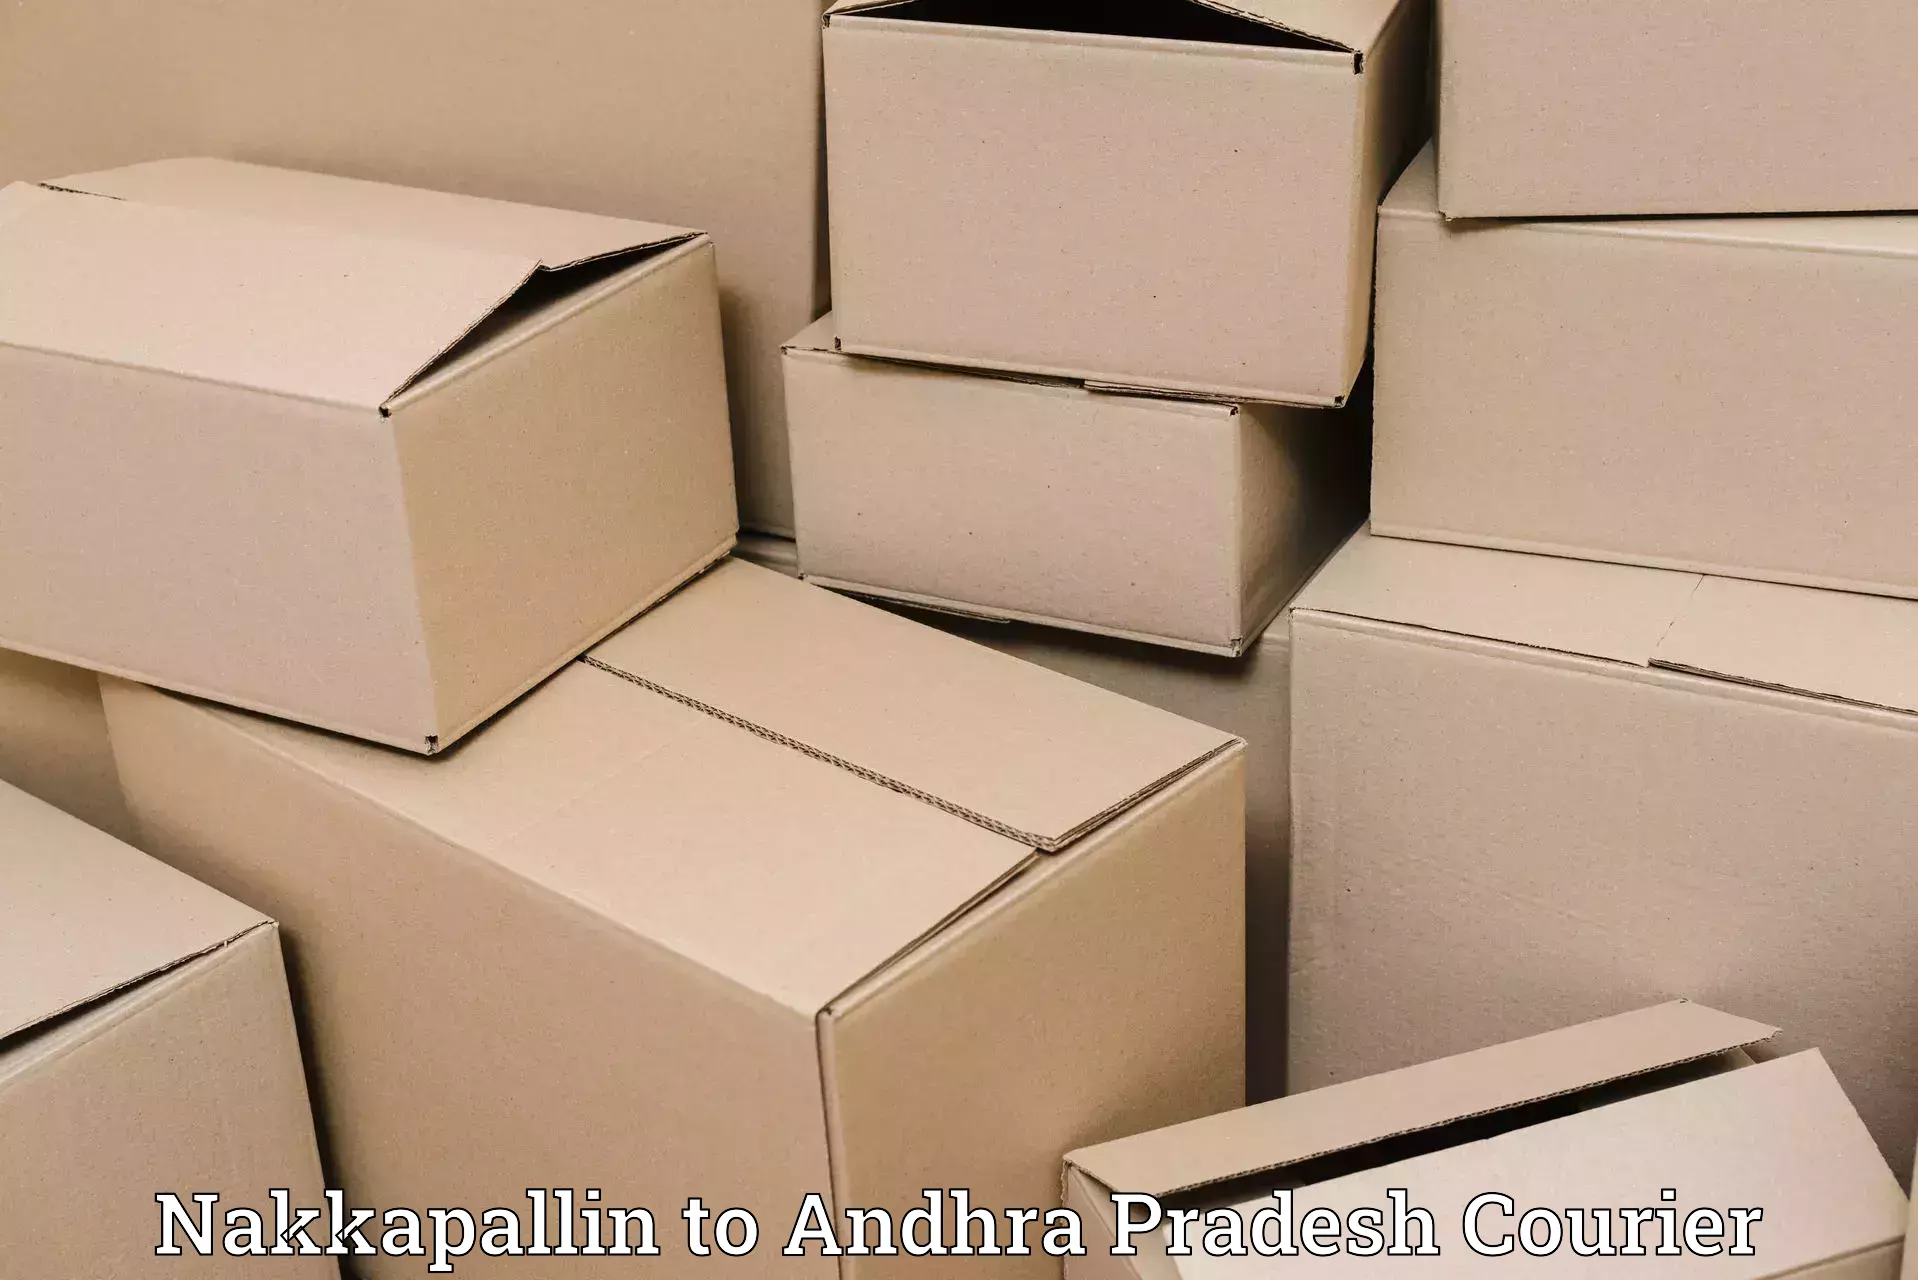 Express delivery network Nakkapallin to Devarapalli